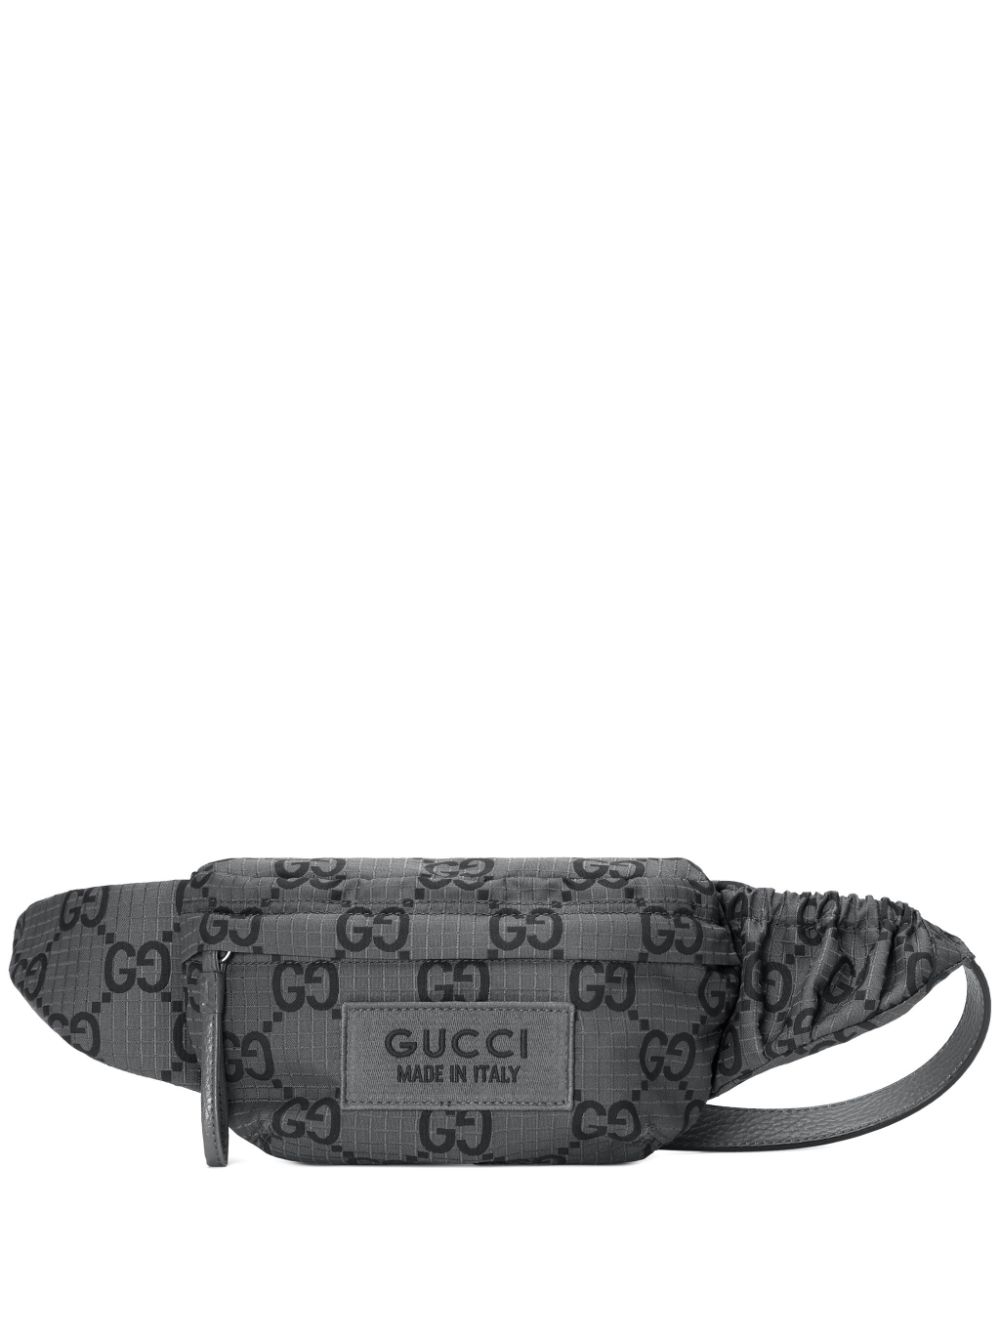 Gucci Maxi Gg 标贴腰包 In Grey